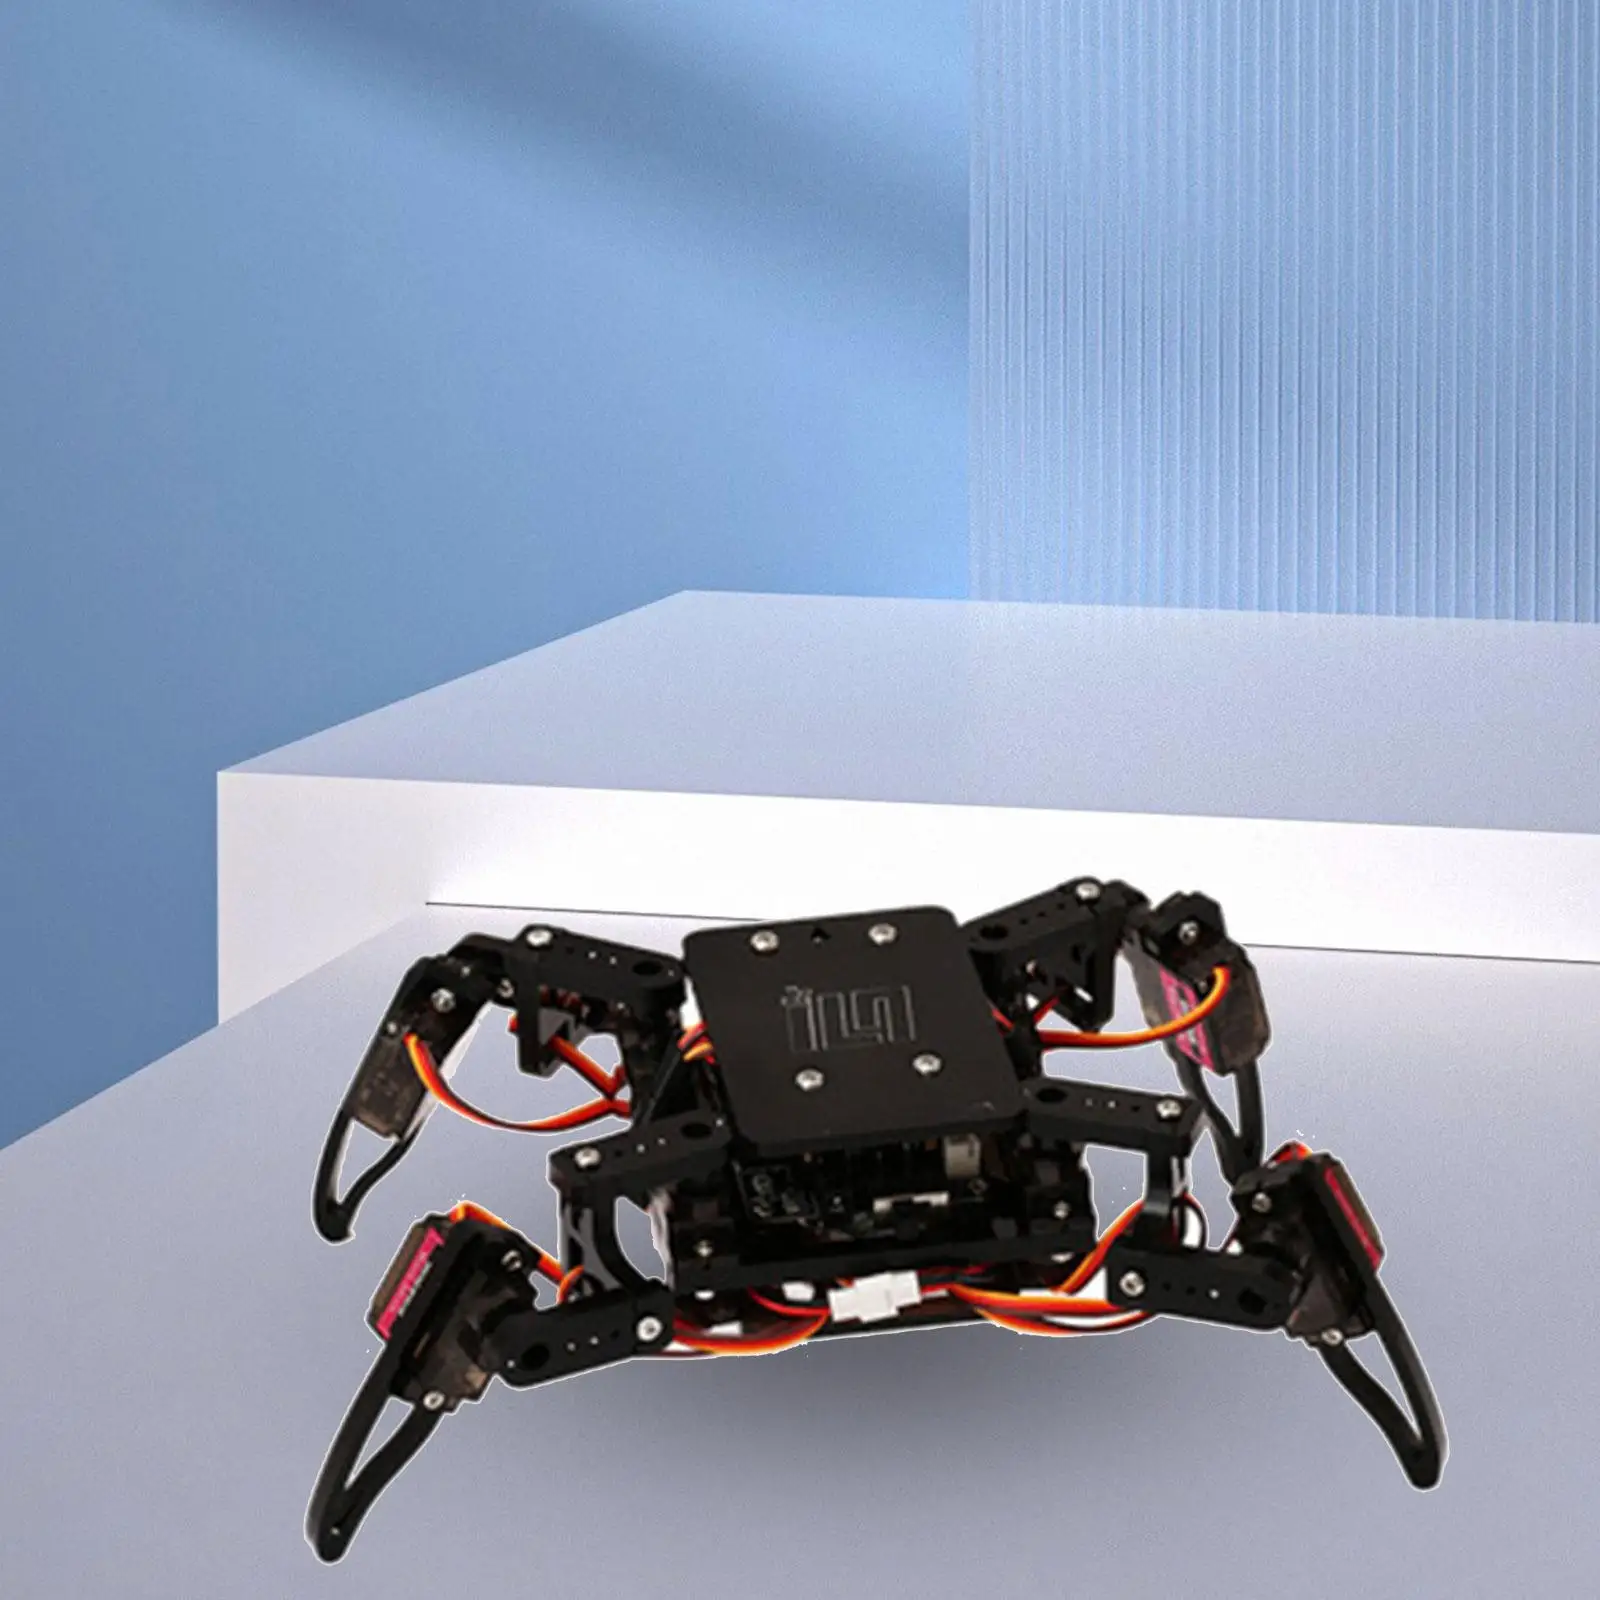 DIY Quadruped Robot Kits Scientific Building Kits for Kids to Learn Program